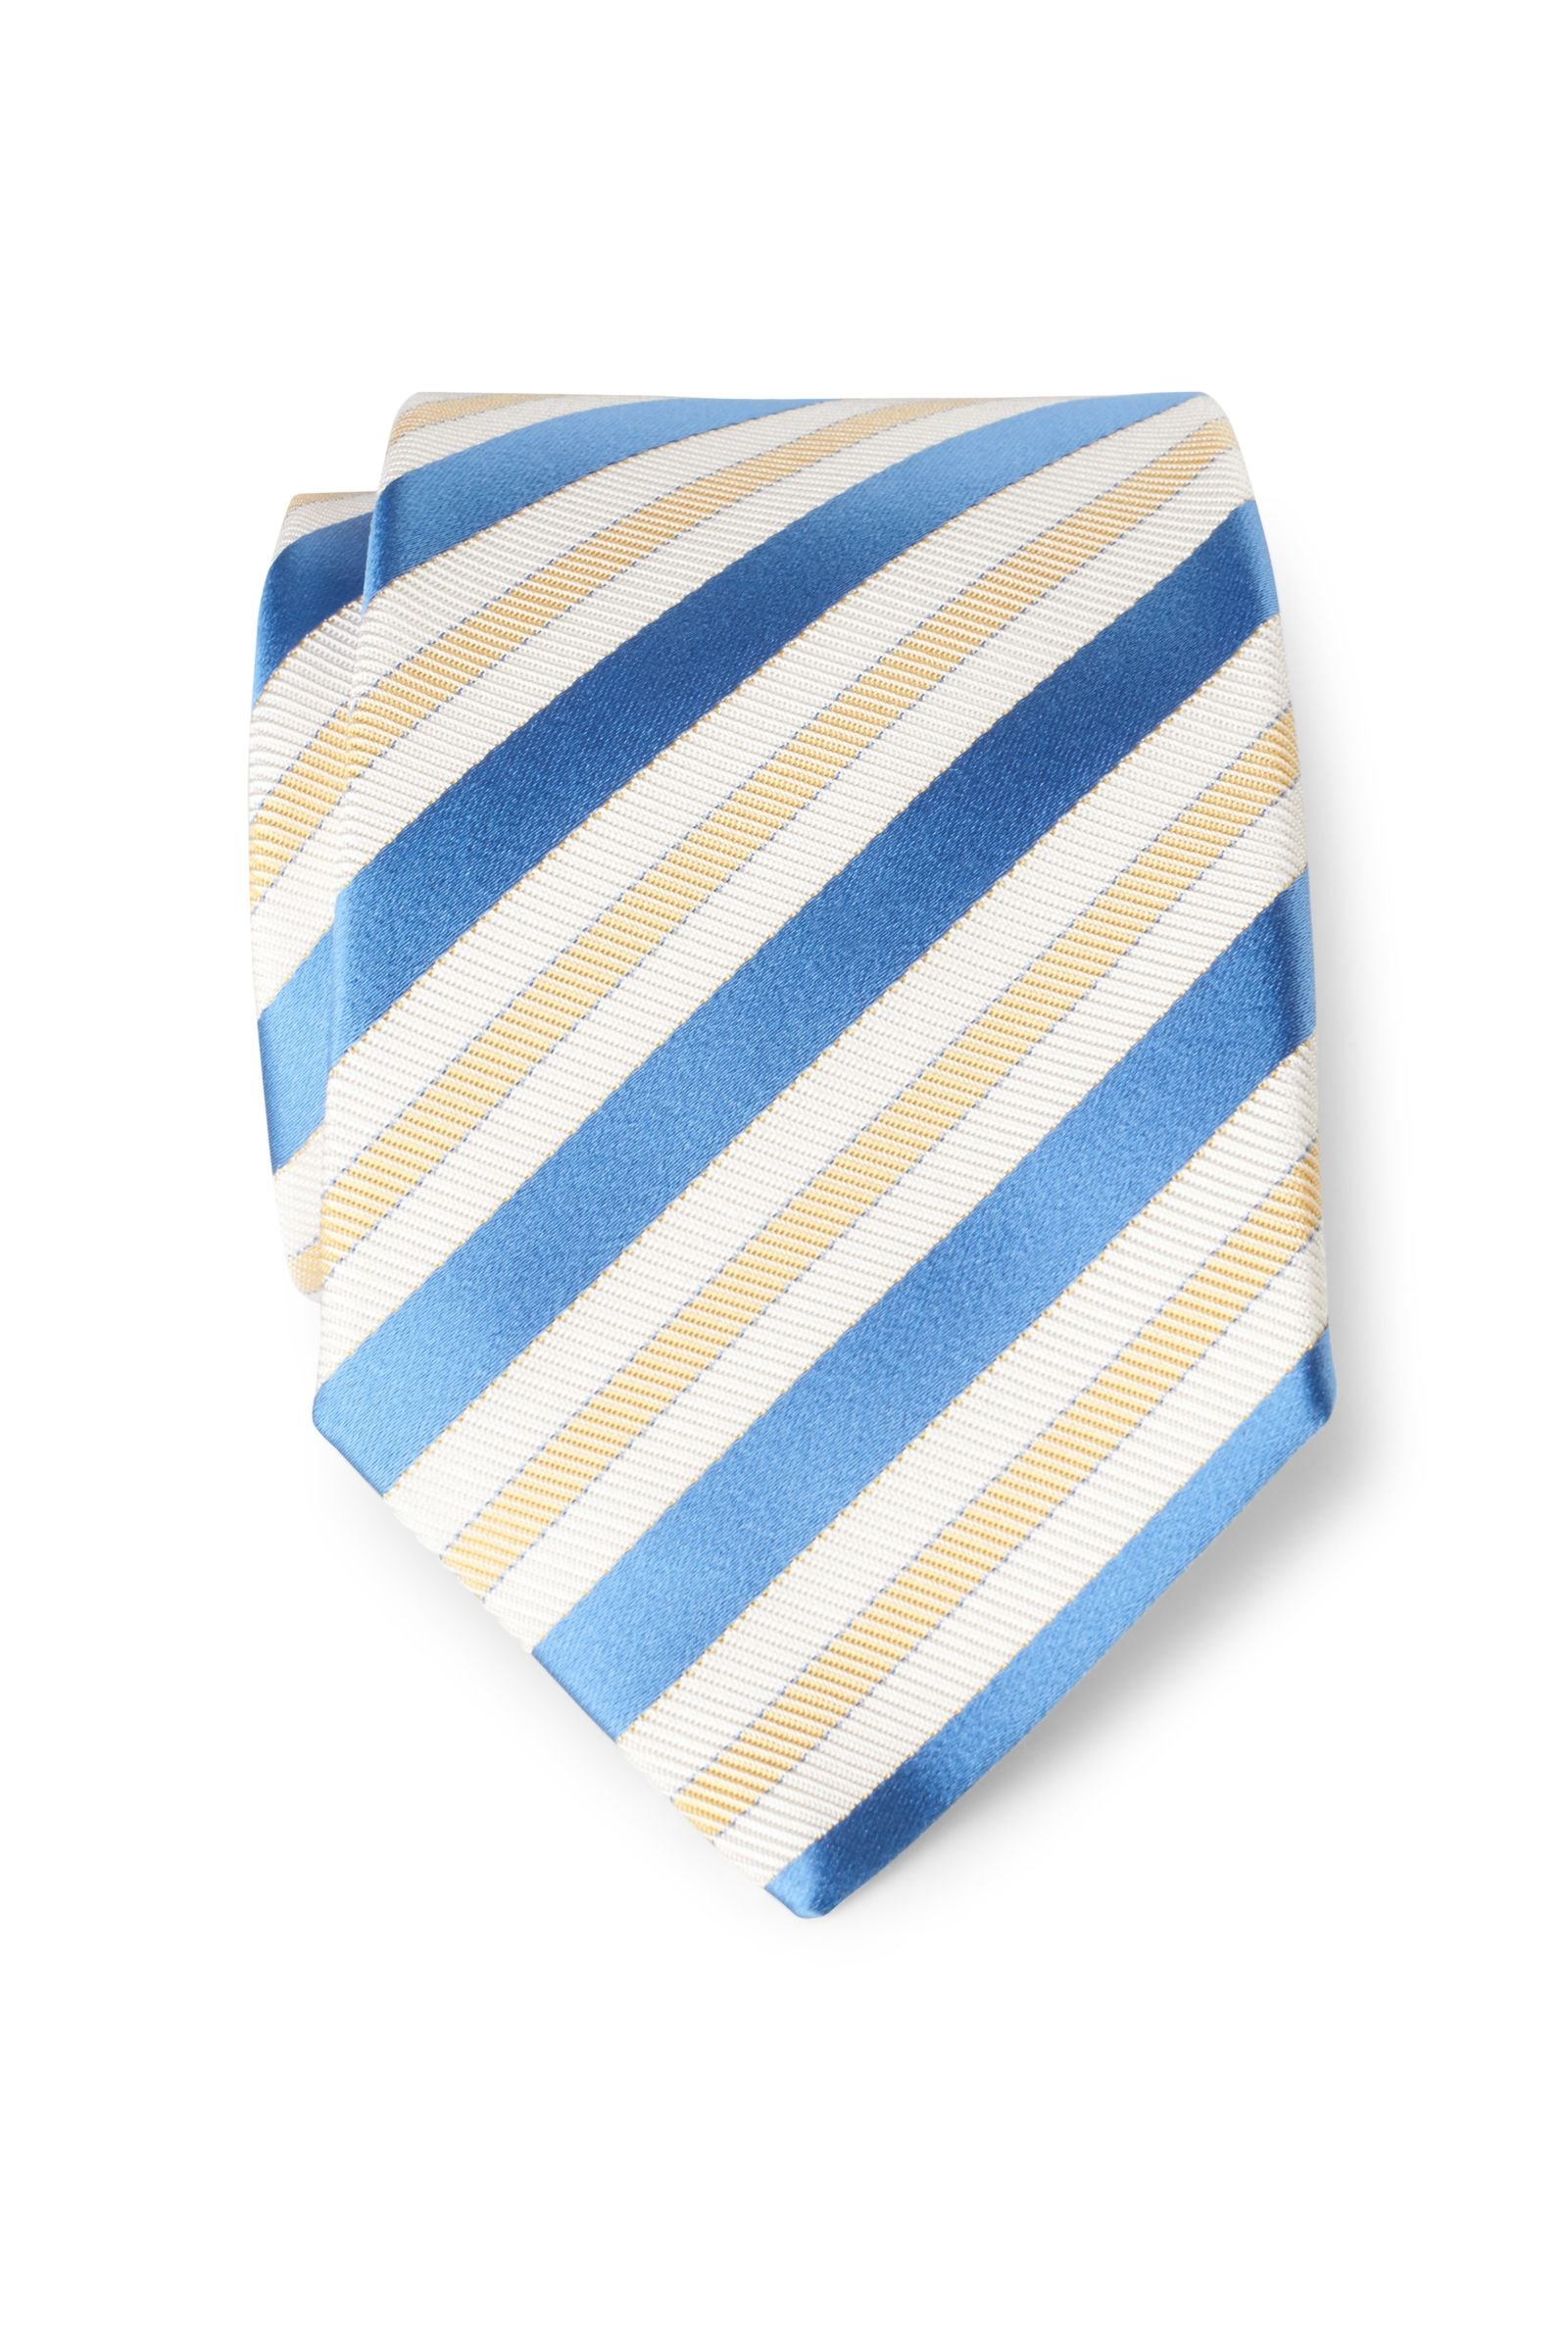 Silk tie blue/yellow striped